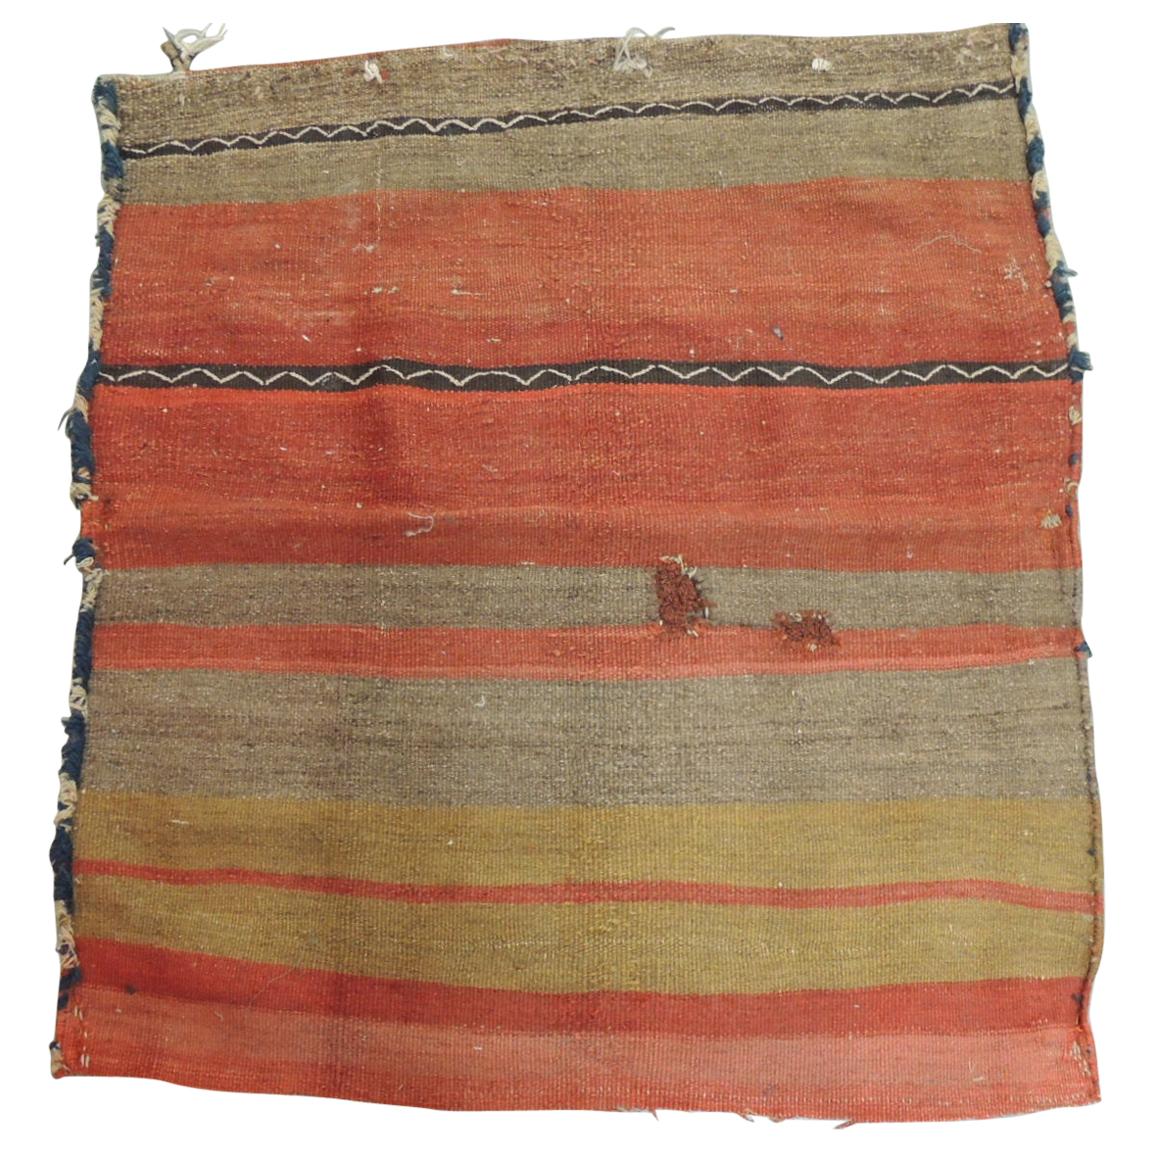 Vintage Orange and Red Kilim "Mafrash" Grain Sack Fragment